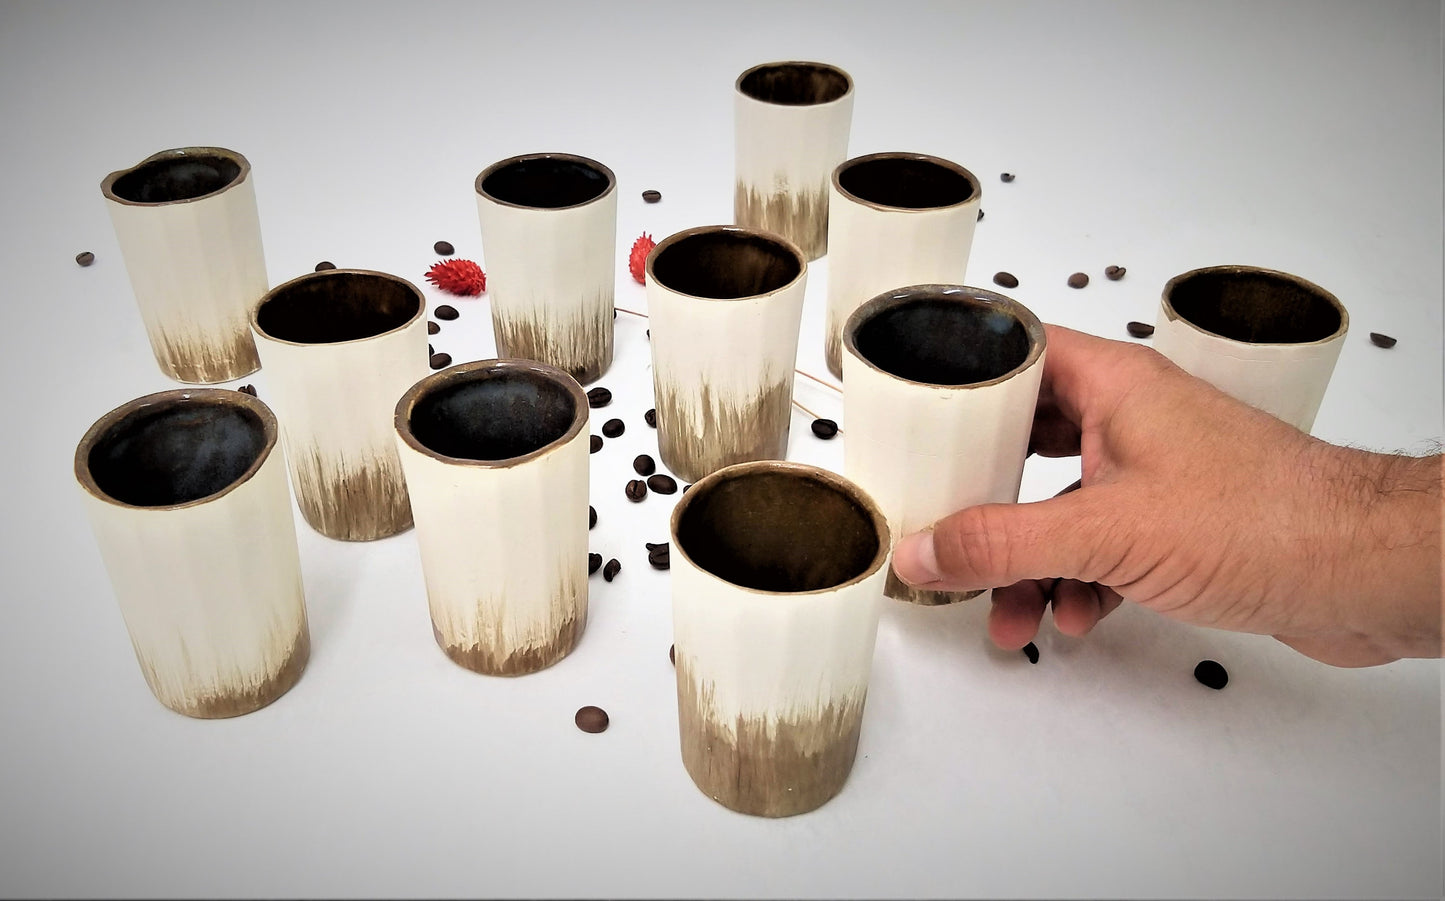 Small handmade ceramic cups